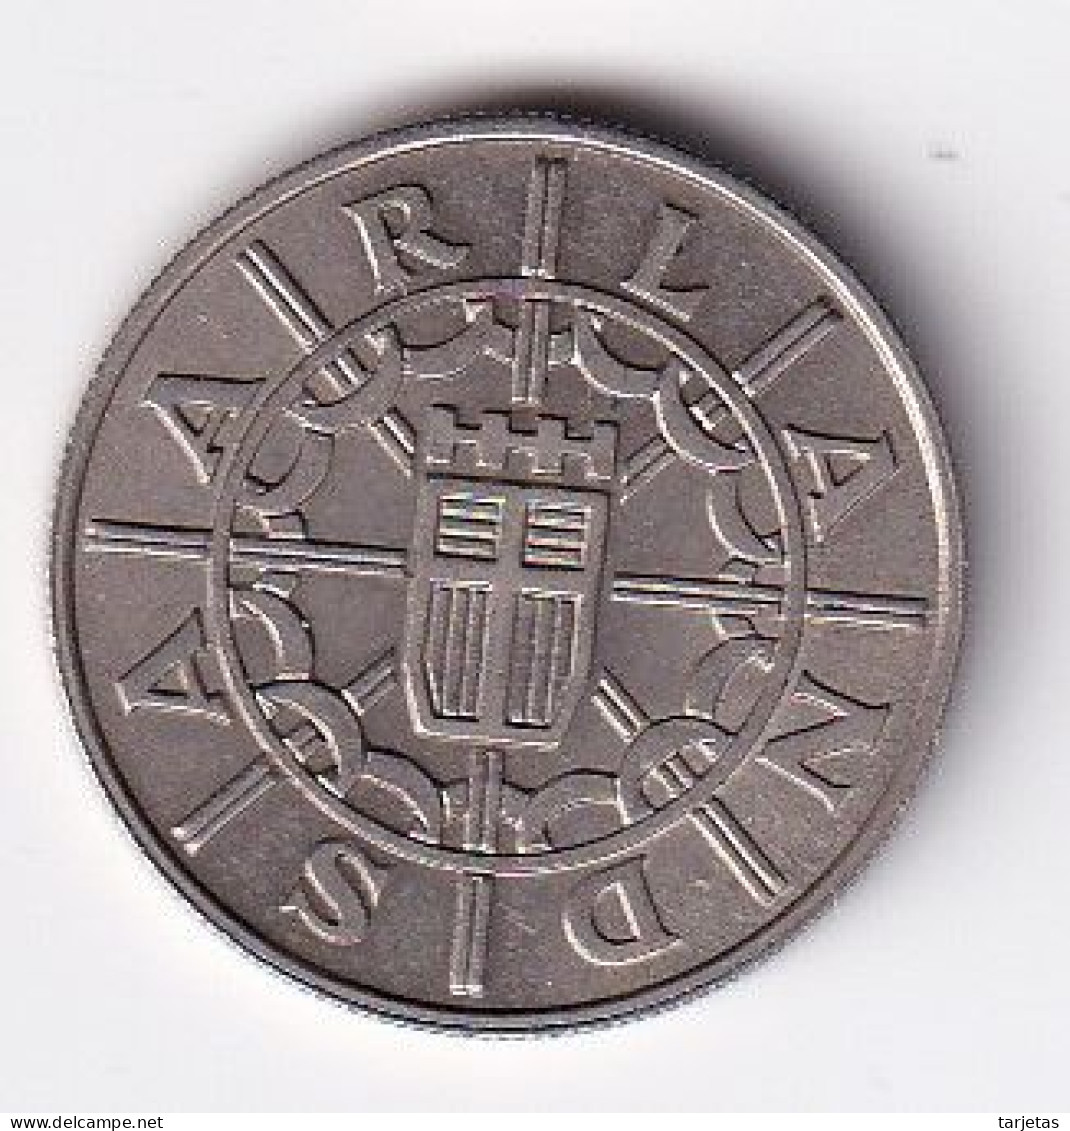 MONEDA DE SARRE DE 100 FRANCS DEL AÑO 1955 SIN CIRCULAR (UNC) - 100 Franchi